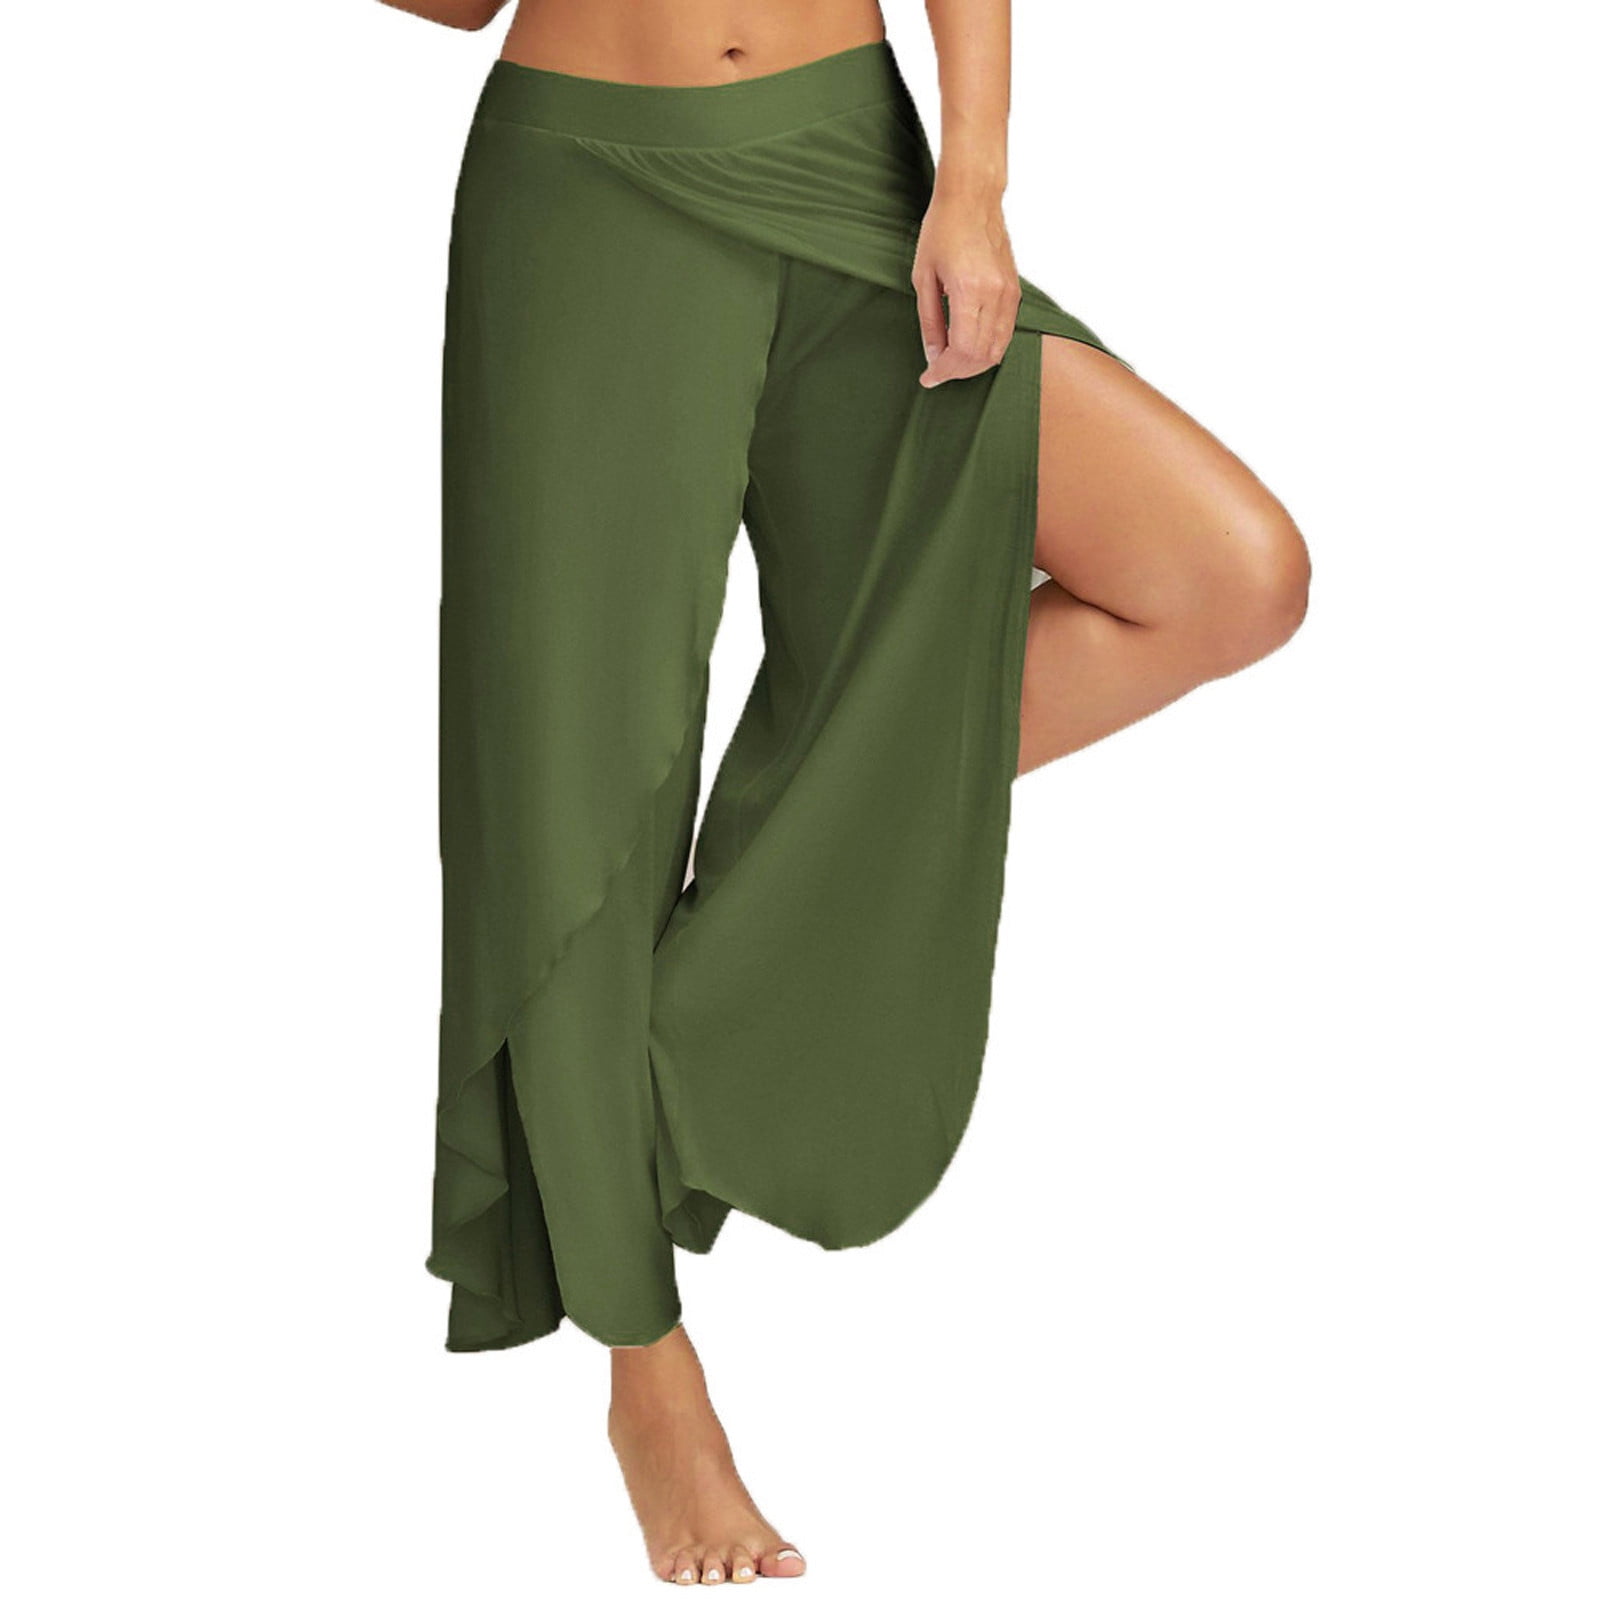  Green Maze and Street Lights Women's Yoga Pants High